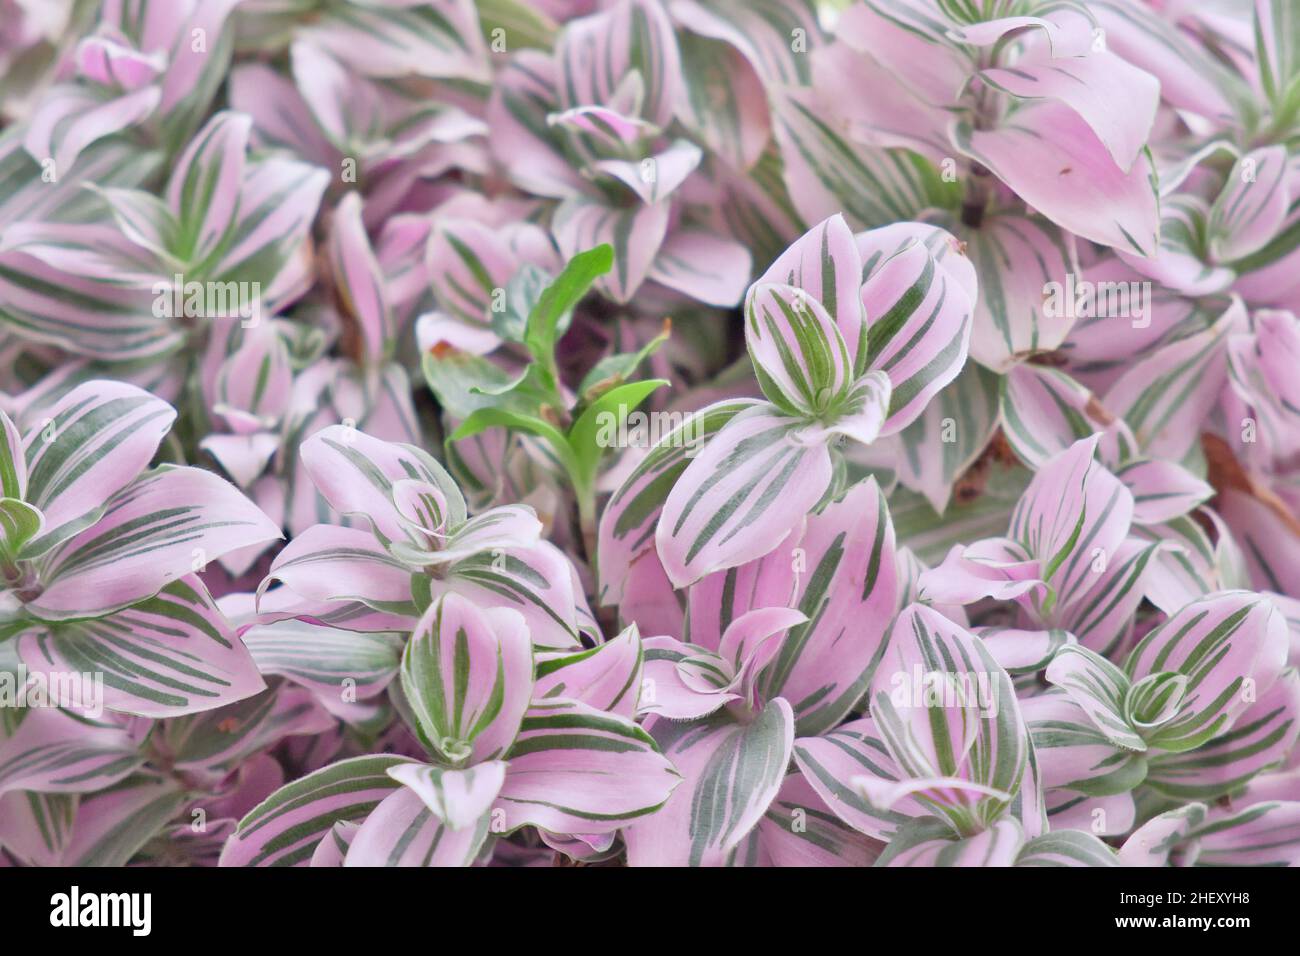 Tradescantia albiflora Nanouk tender variegated pink, green and purple leaves pattern. Stock Photo